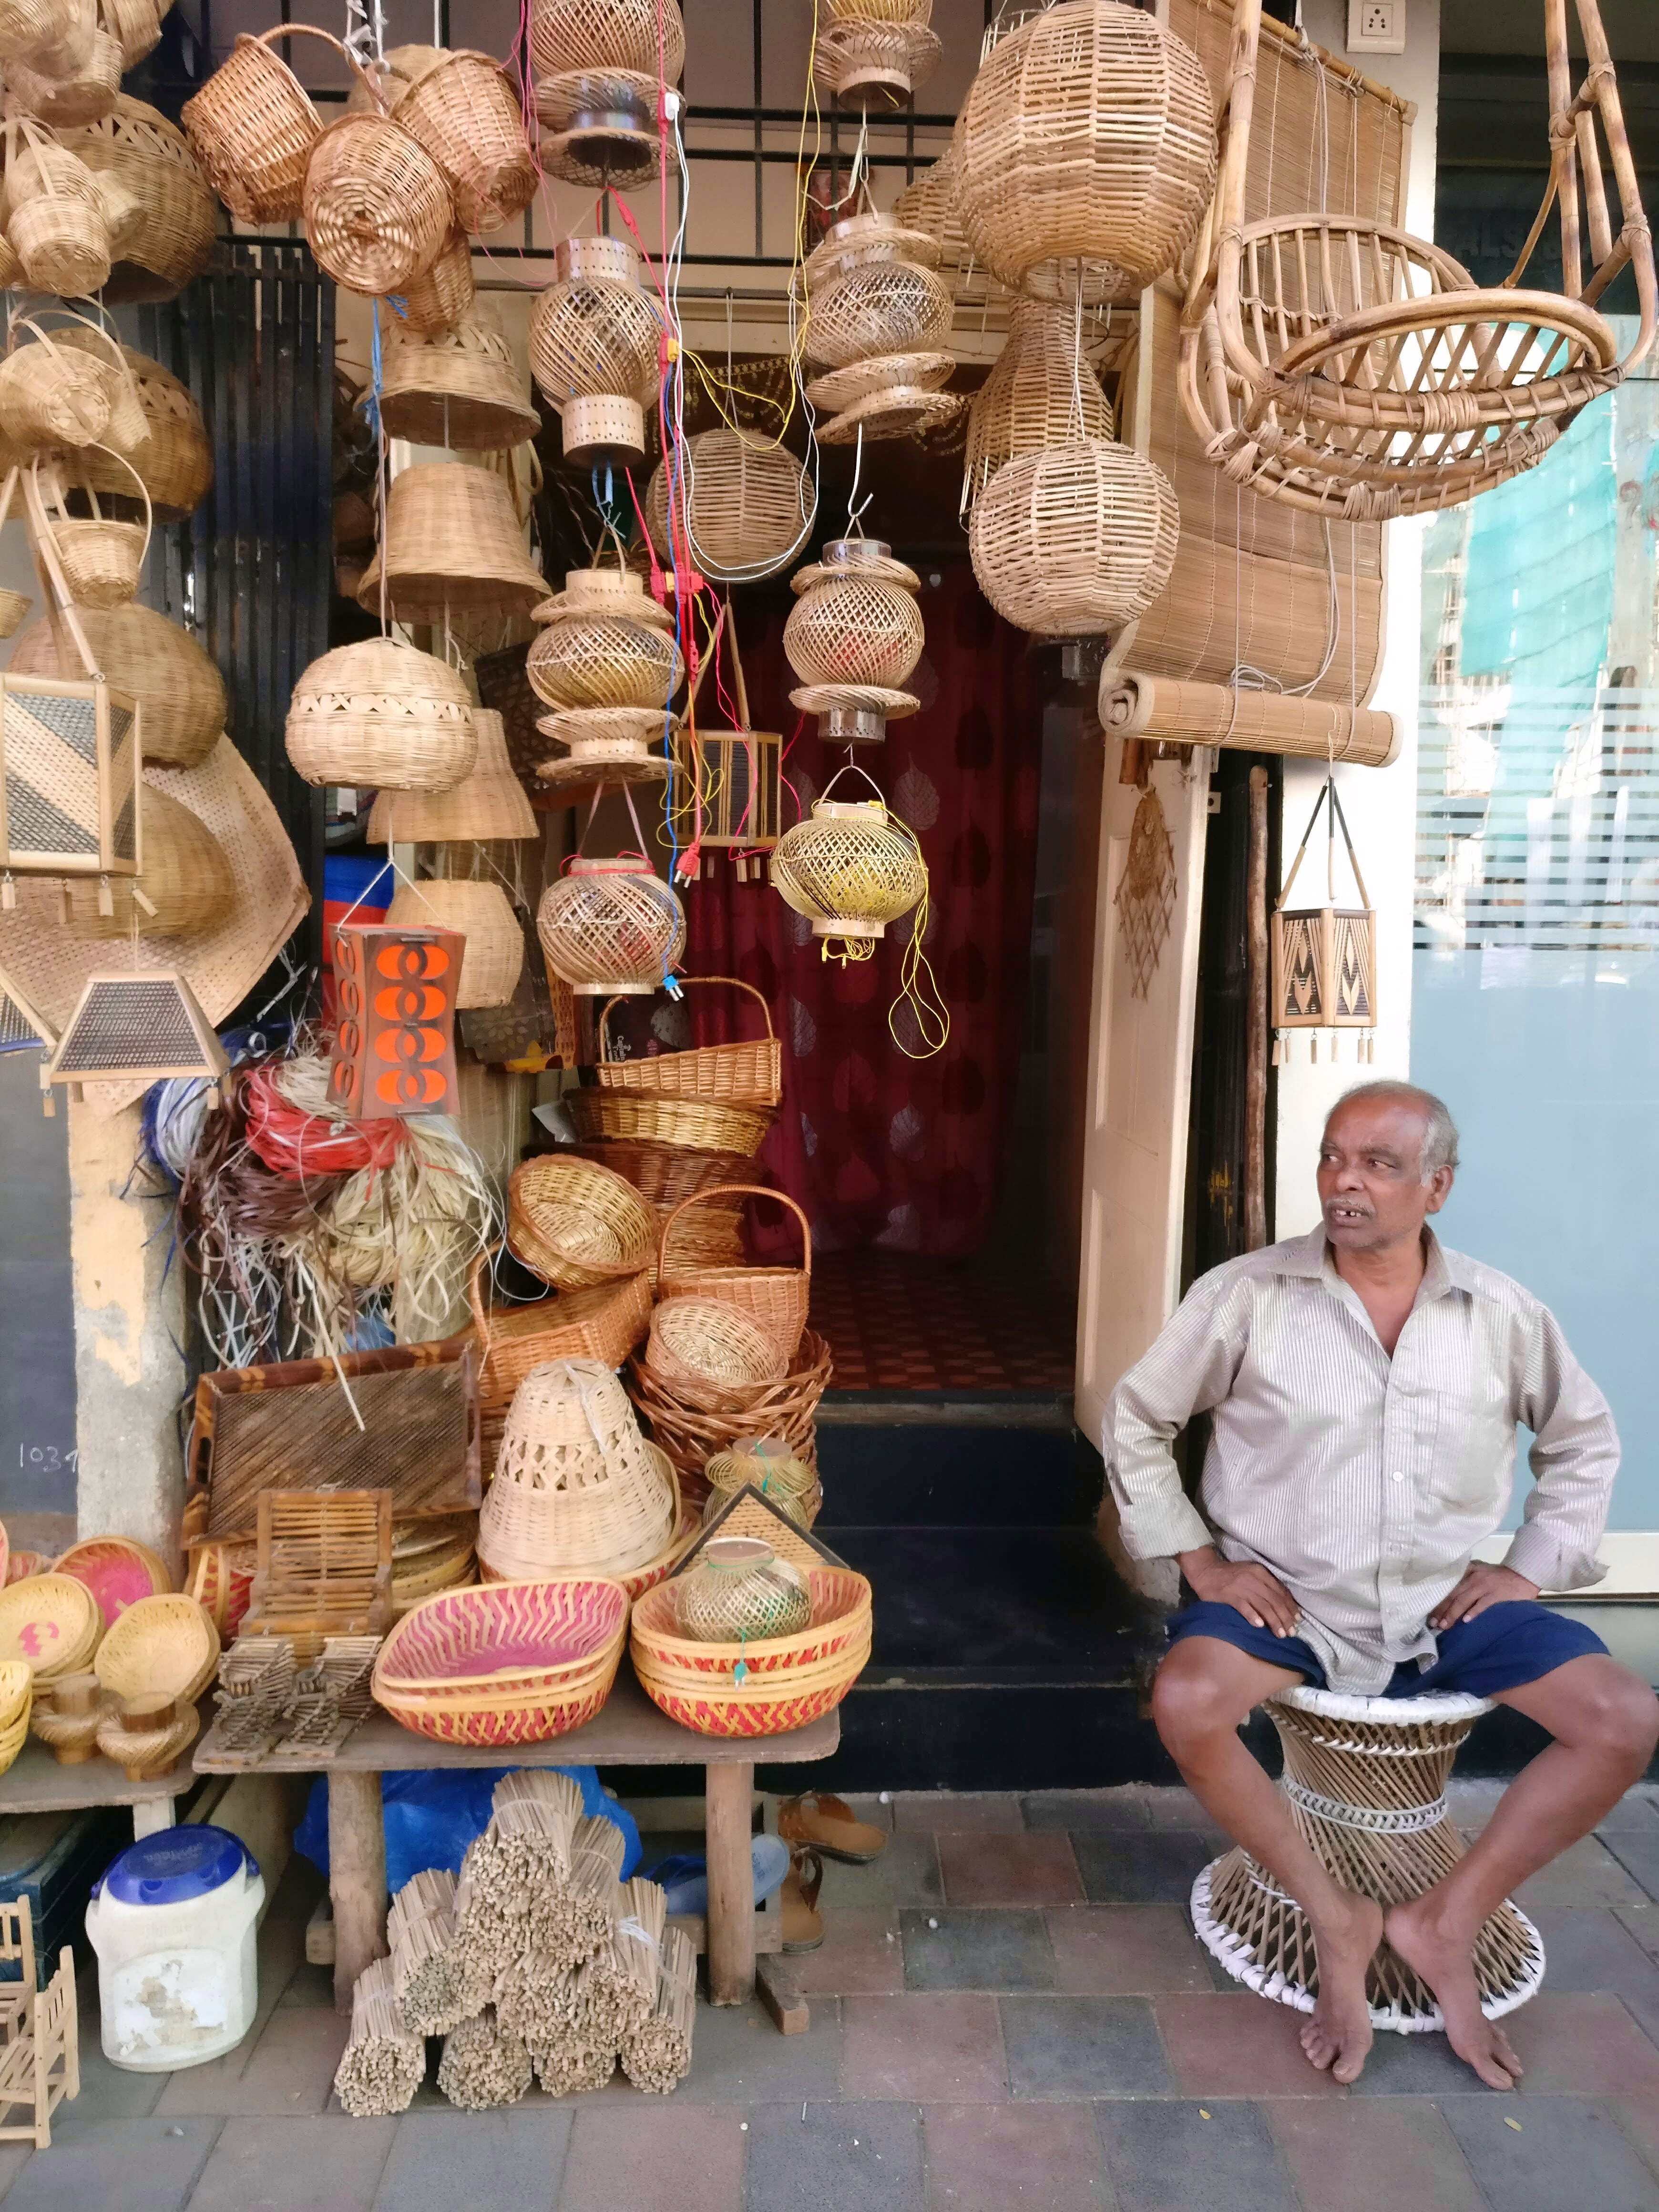 Pottery,Shopkeeper,Bazaar,Ceramic,Art,Selling,Anthropology